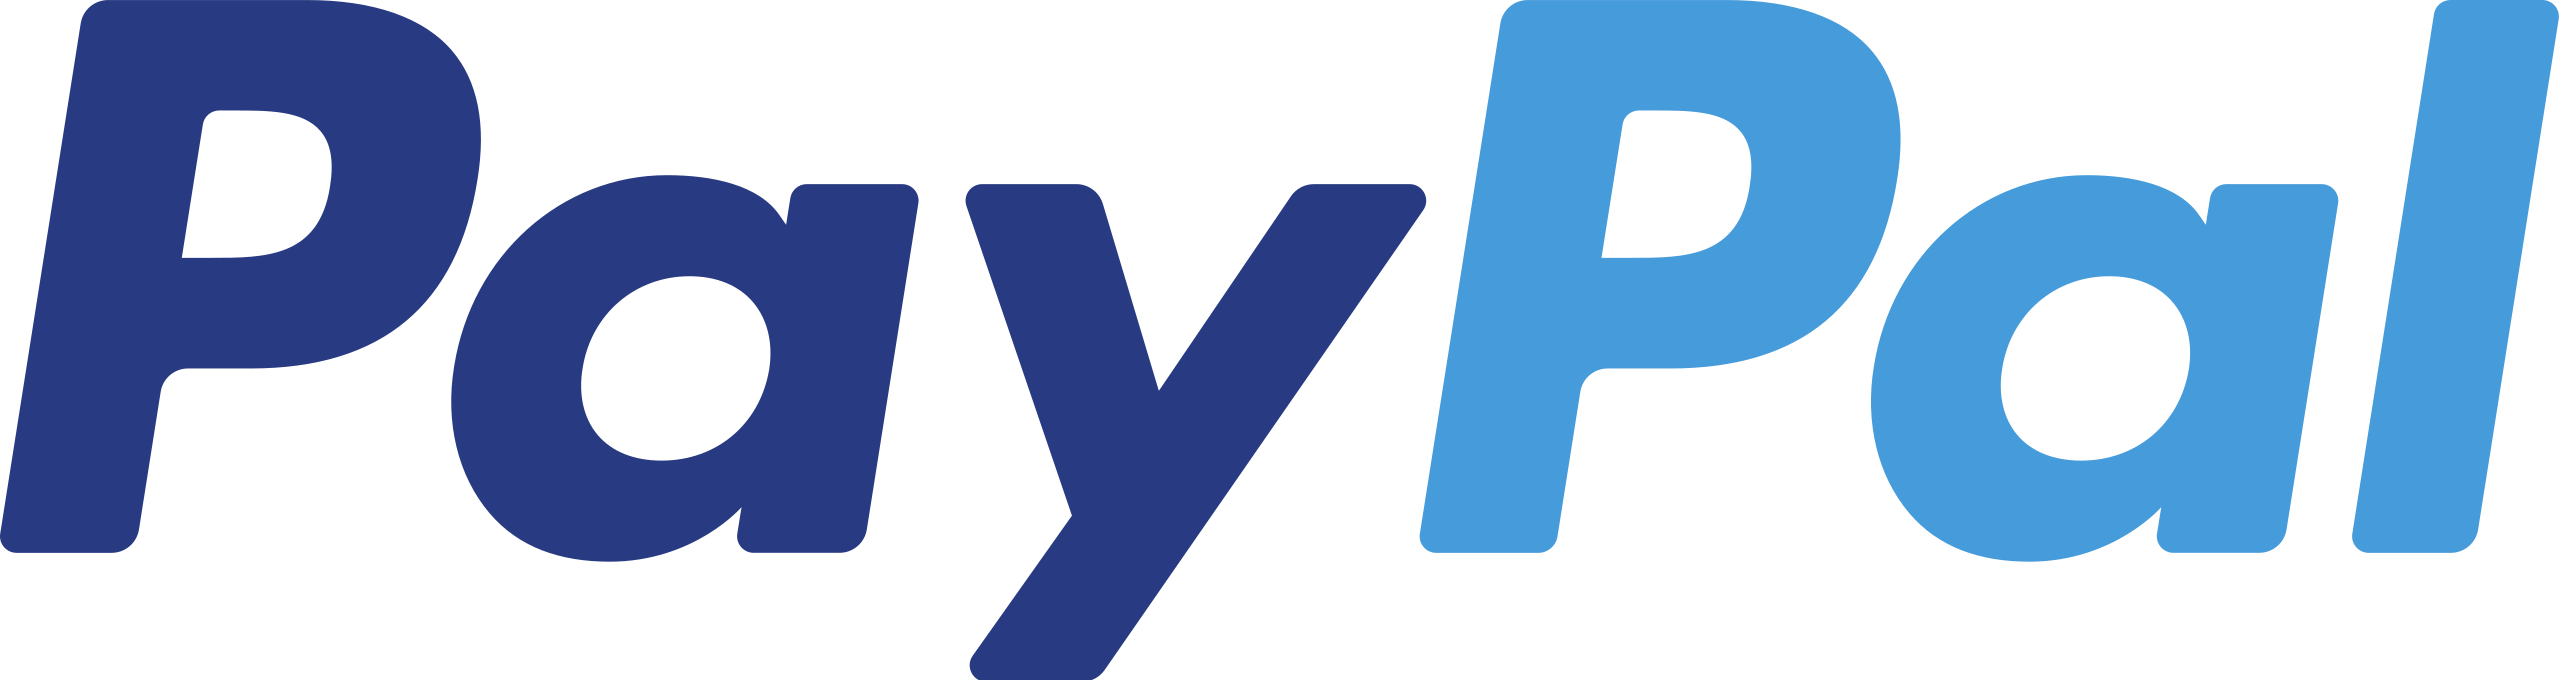 2560px-PayPal_logo.svg